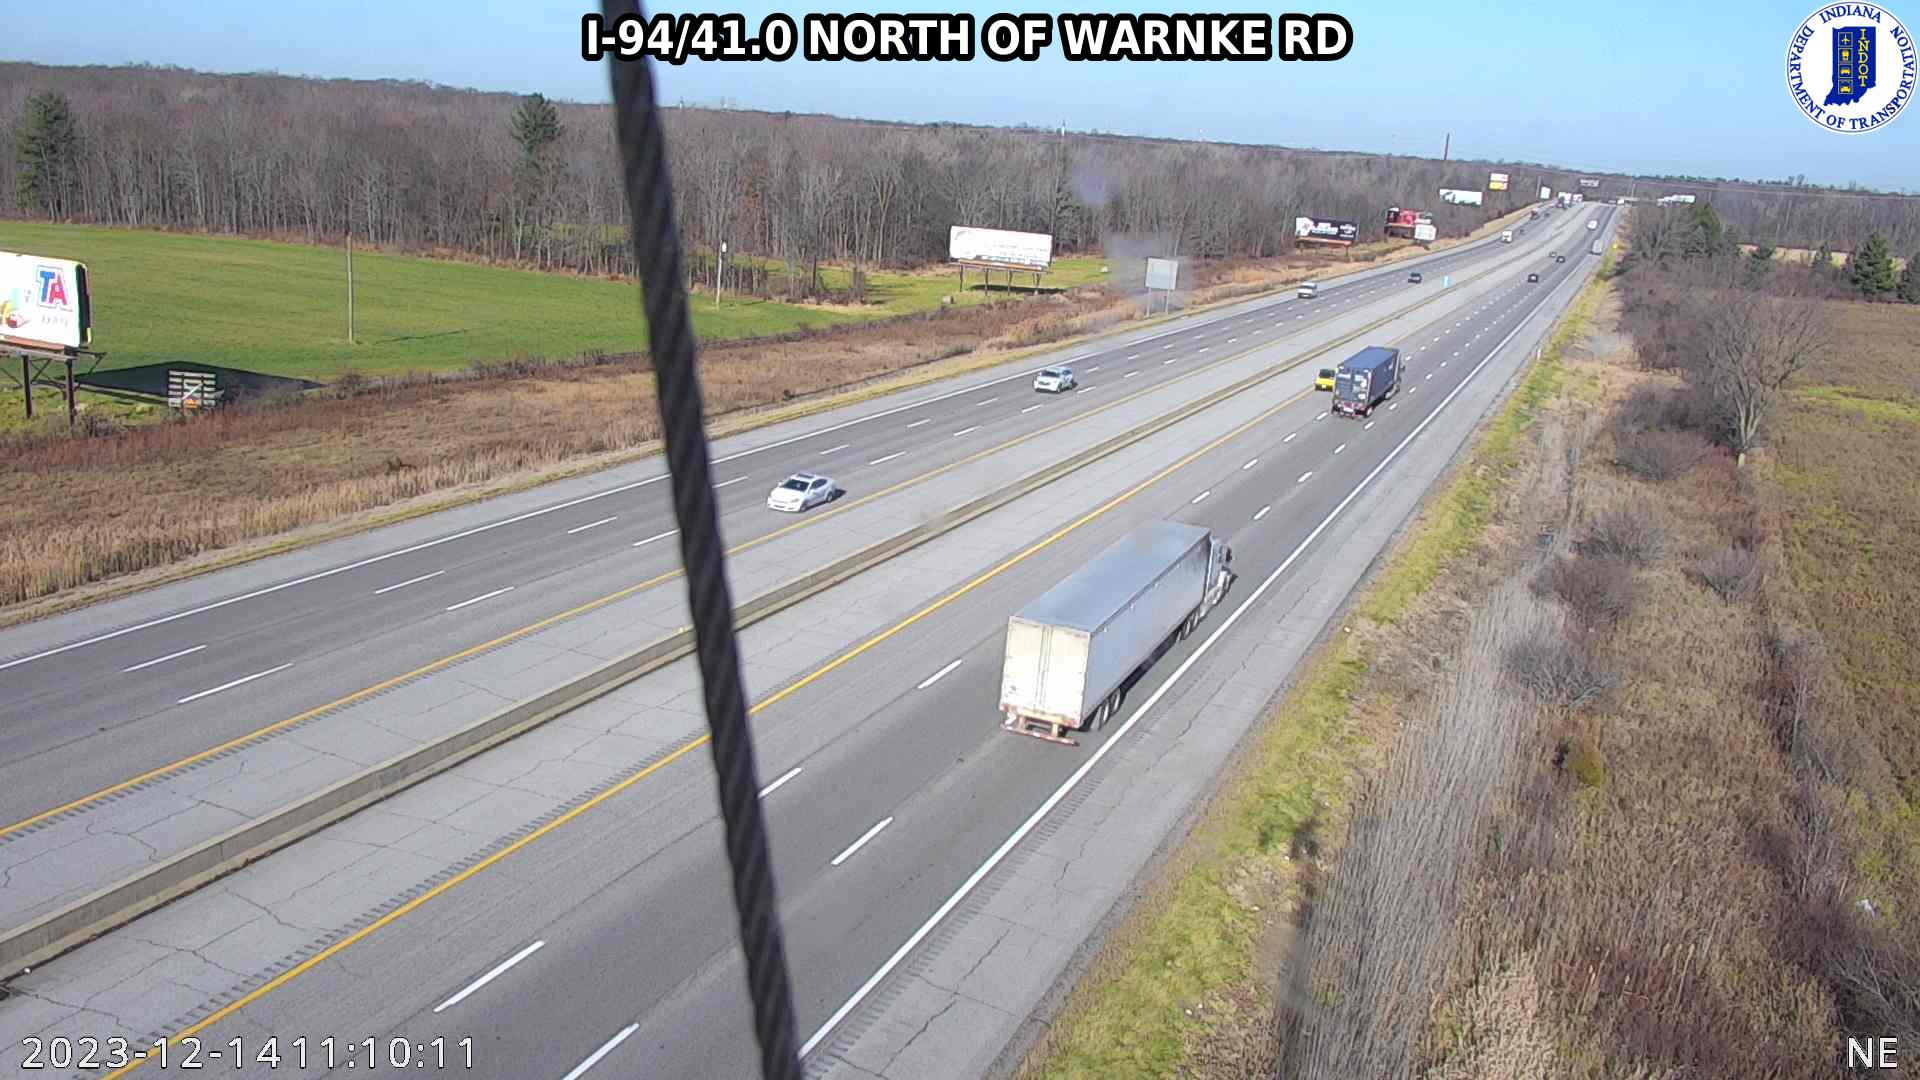 Traffic Cam Ambler: I-94: I-94/41.0 NORTH OF WARNKE RD: I-94/41.0 NORTH OF WARNKE RD Player